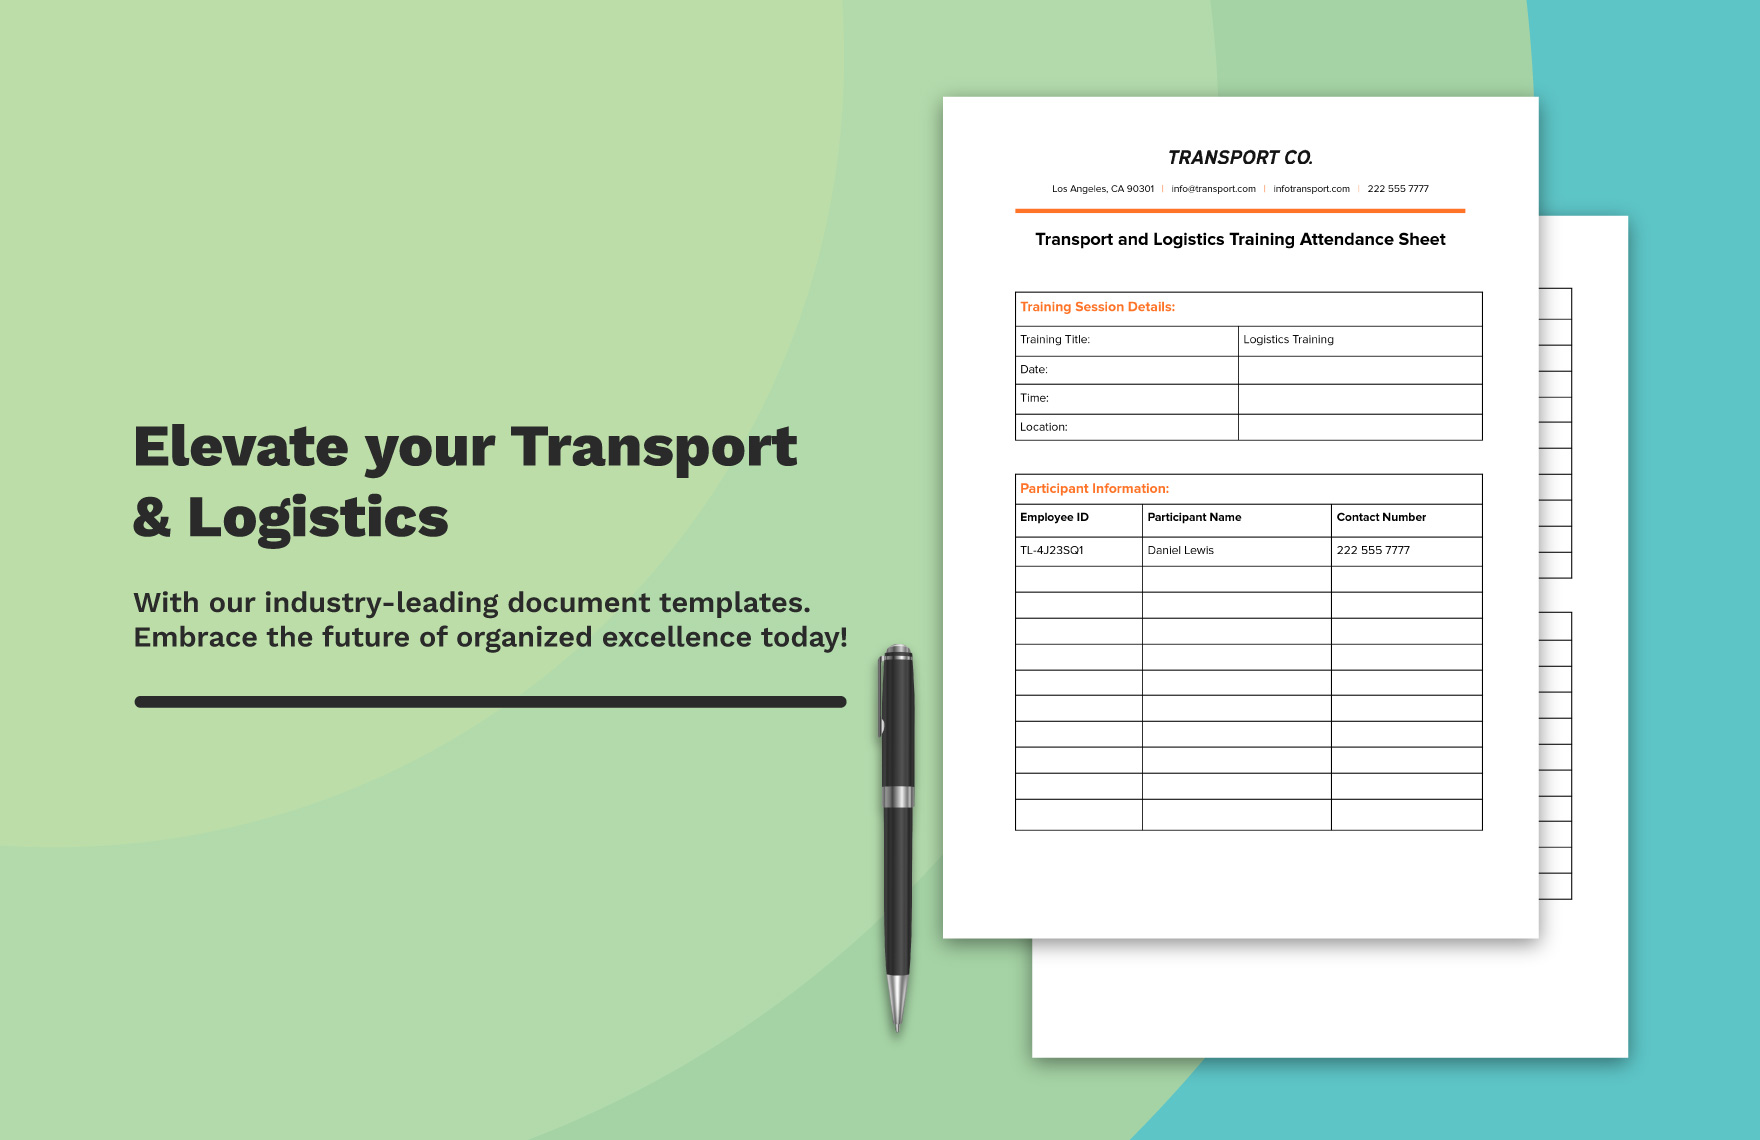 Transport and Logistics Training Attendance Sheet Template